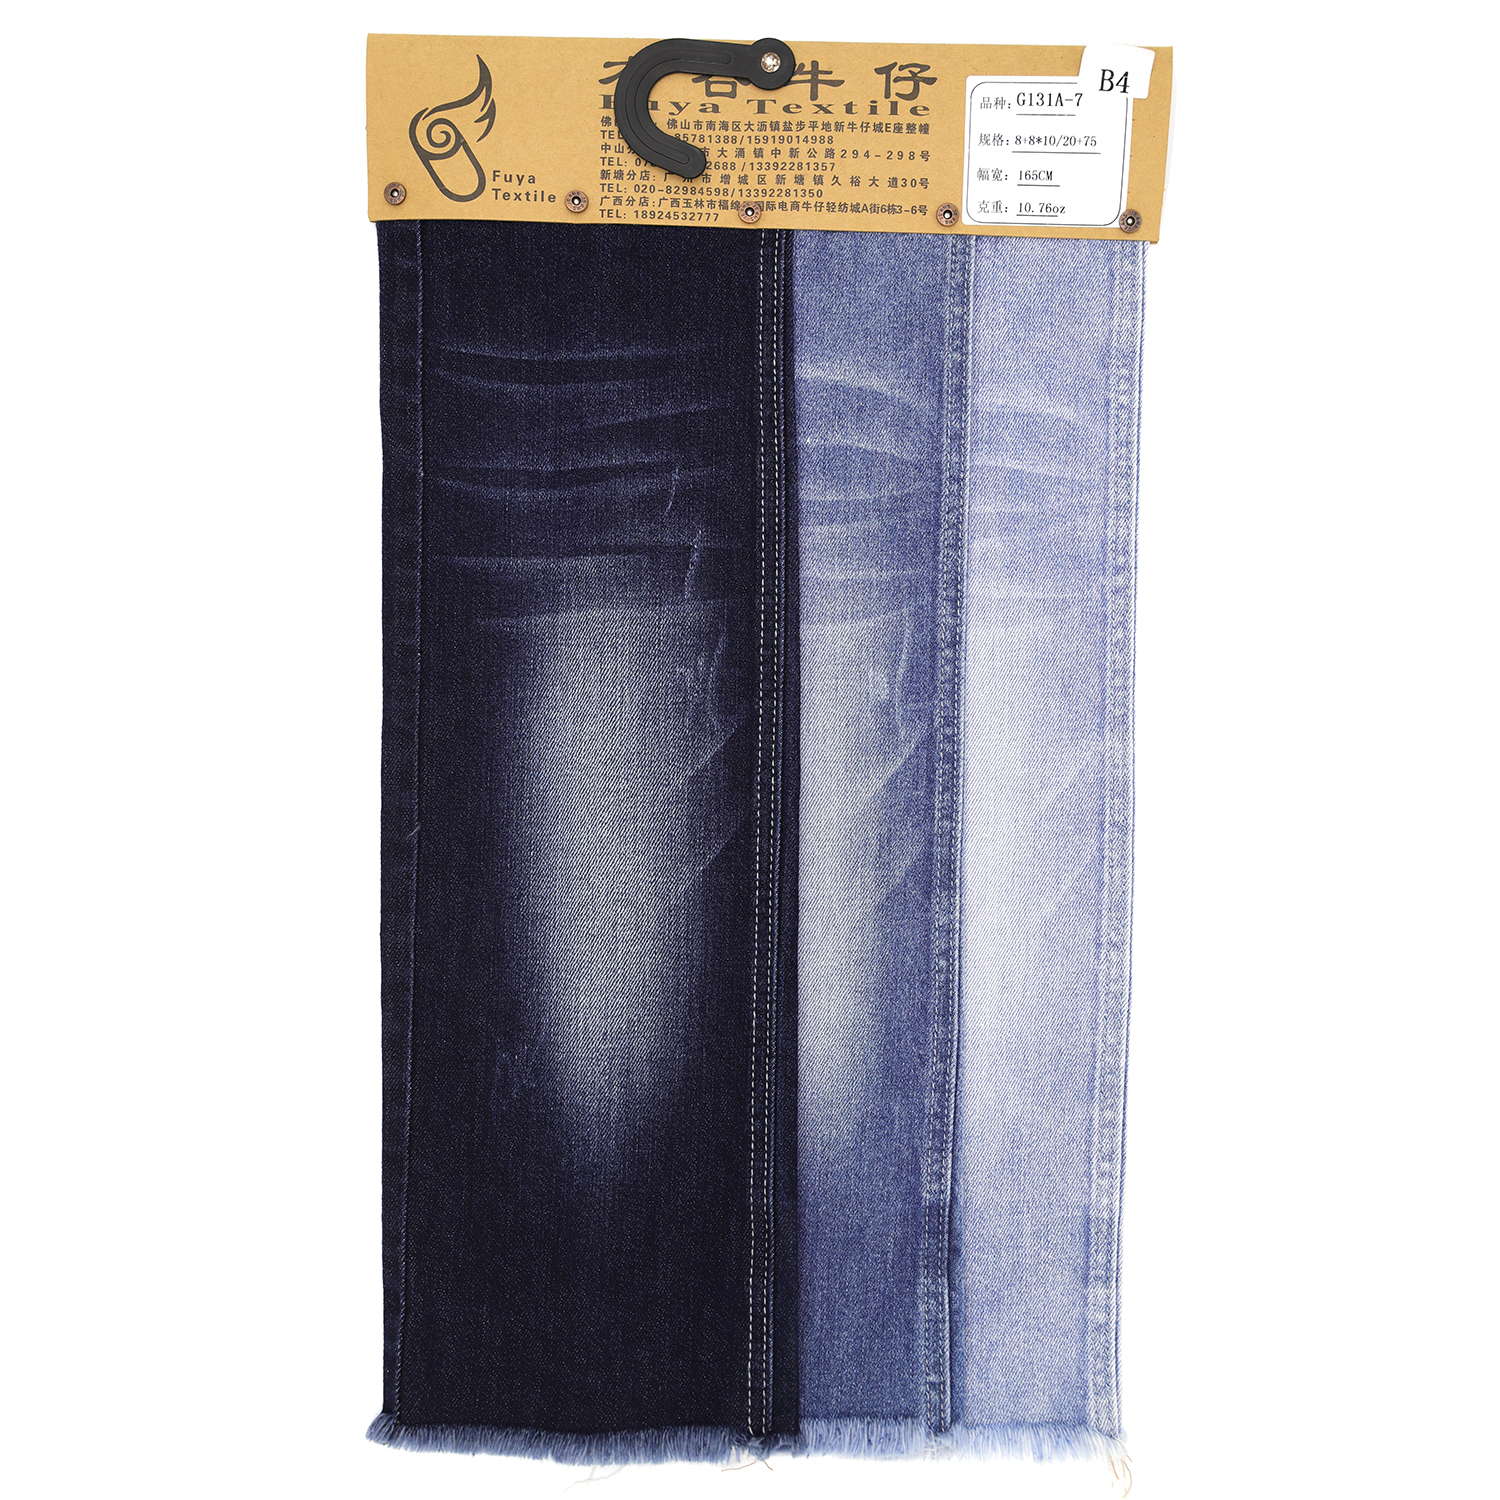 G131a-7 9.4 oz High Quality Denim Fabric for Men's Jean/Jacket with Slub